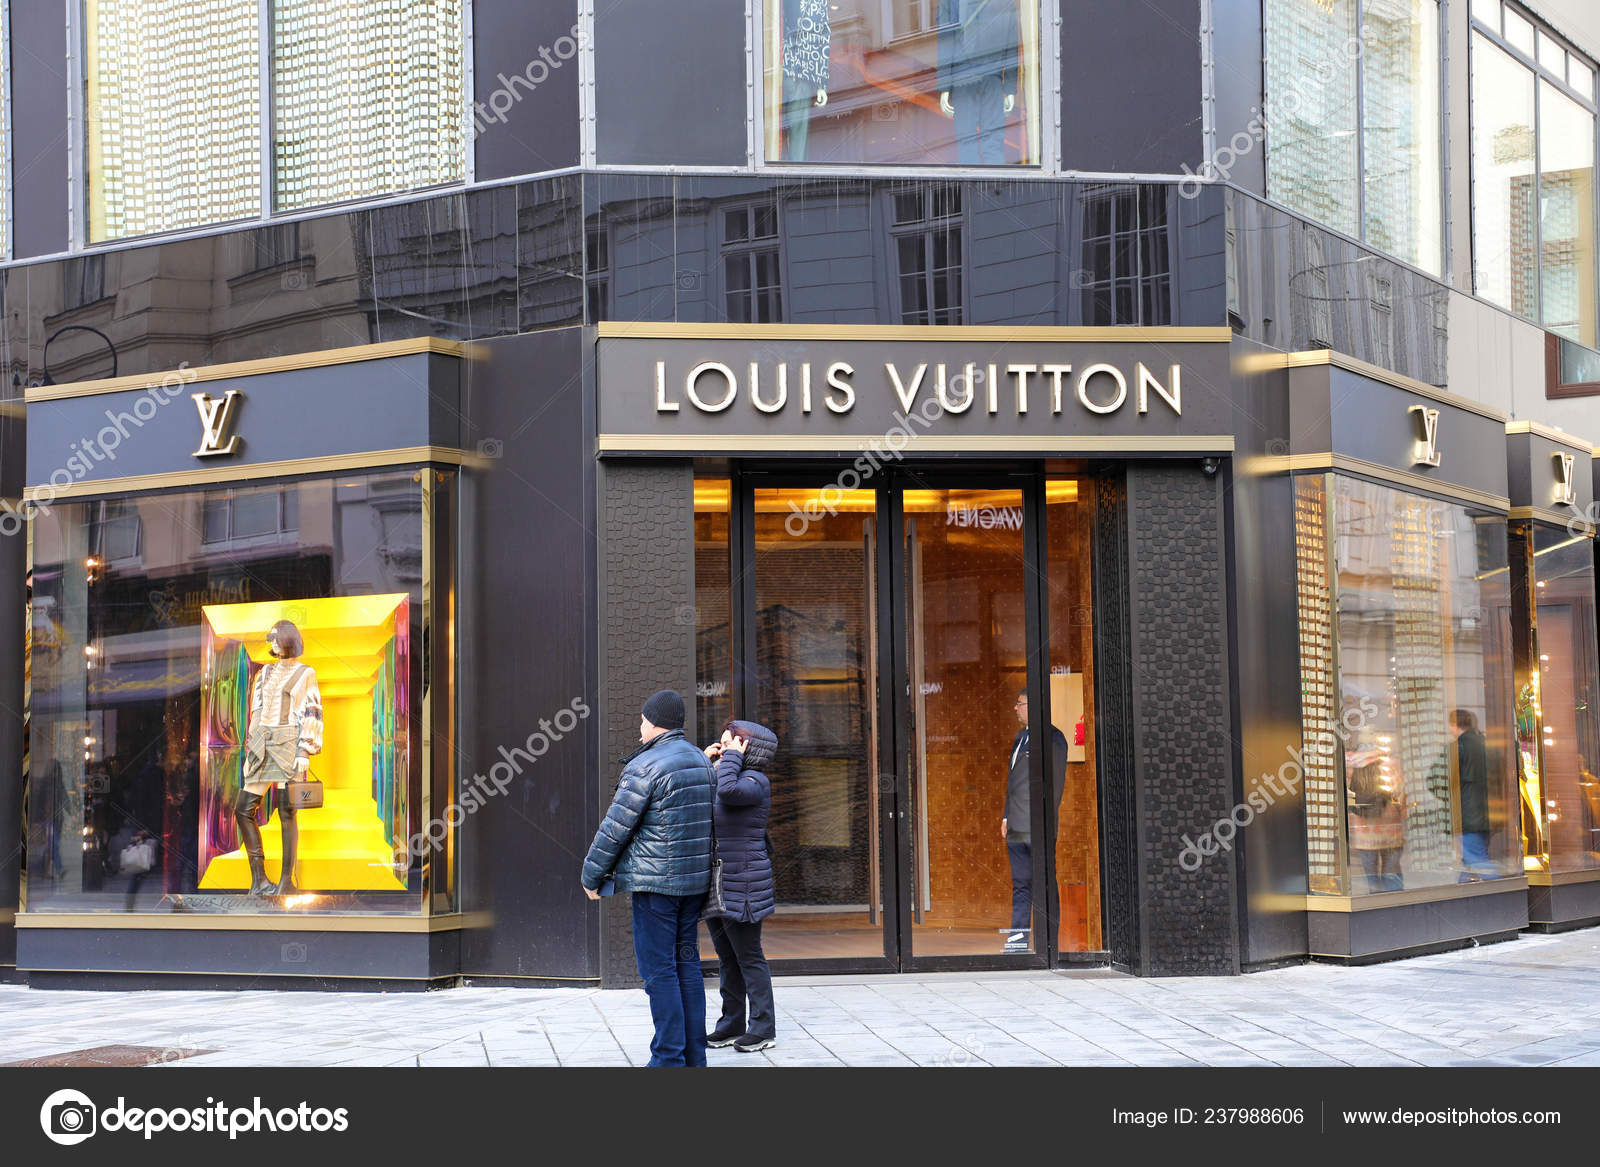 Louis Vuitton Bari store, Italy